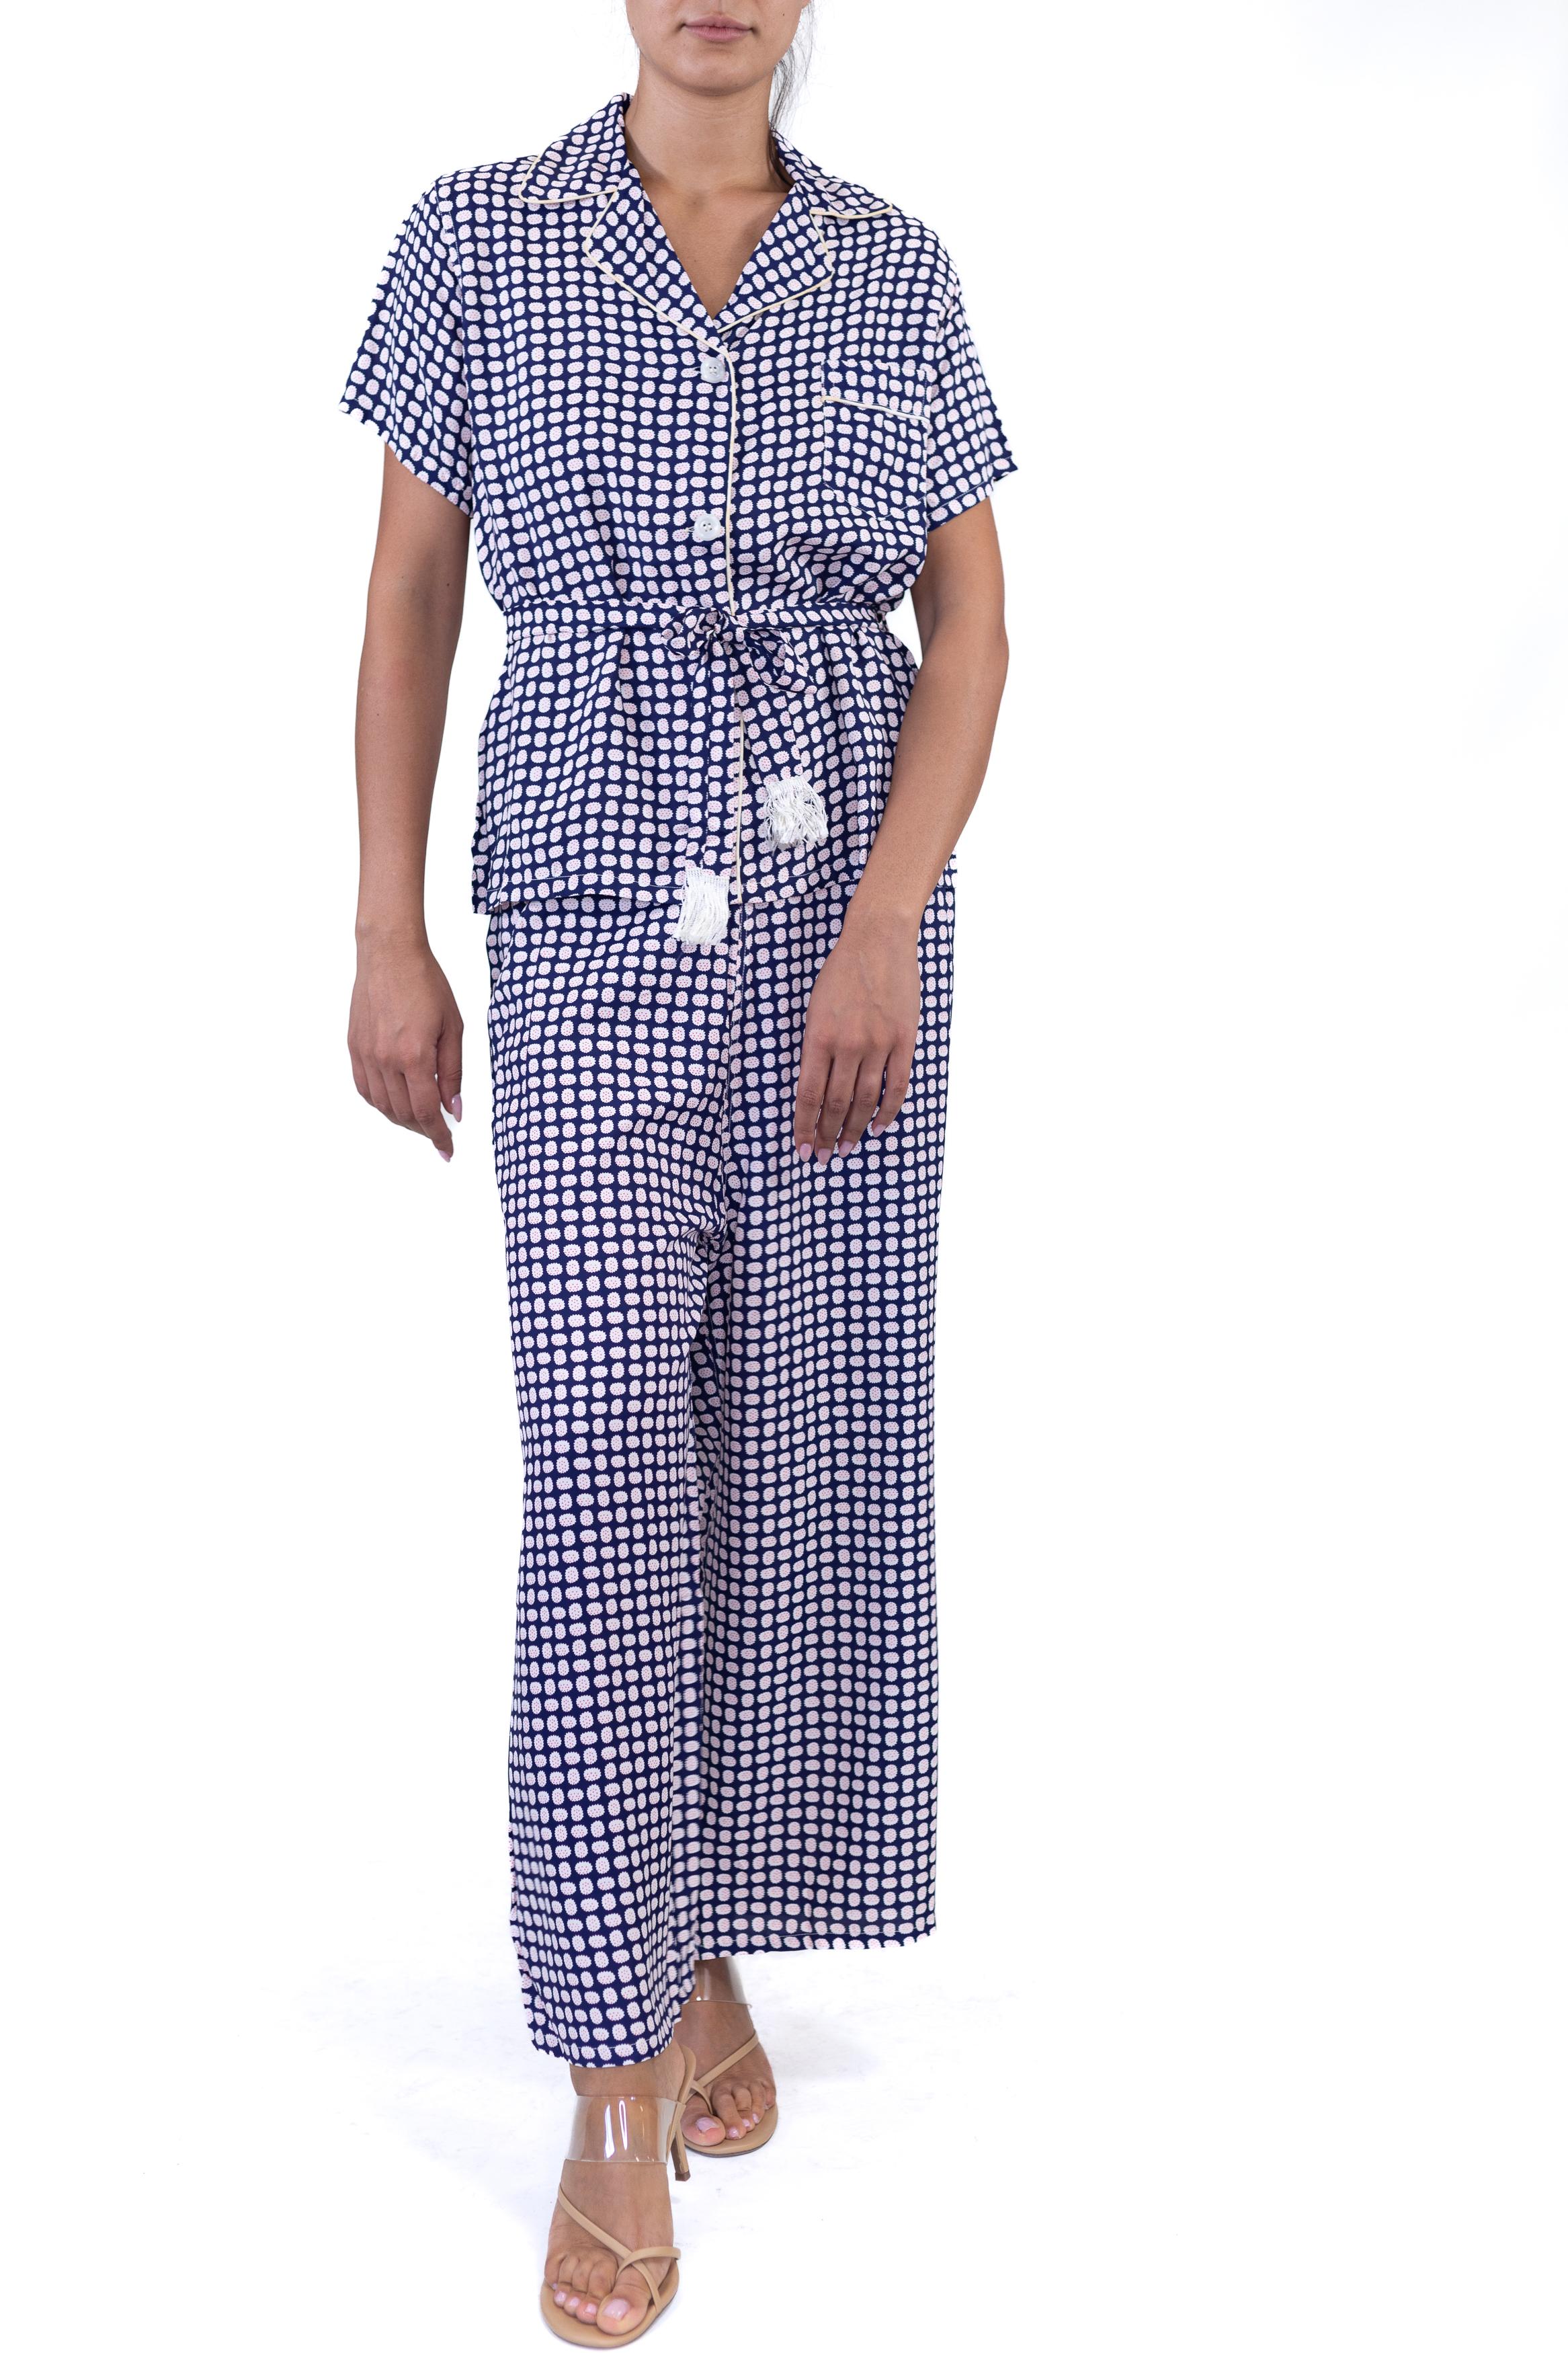 1940S Lewis Frimel Co Blue & White Cold Rayon Polka Dot Print Pajamas For Sale 1